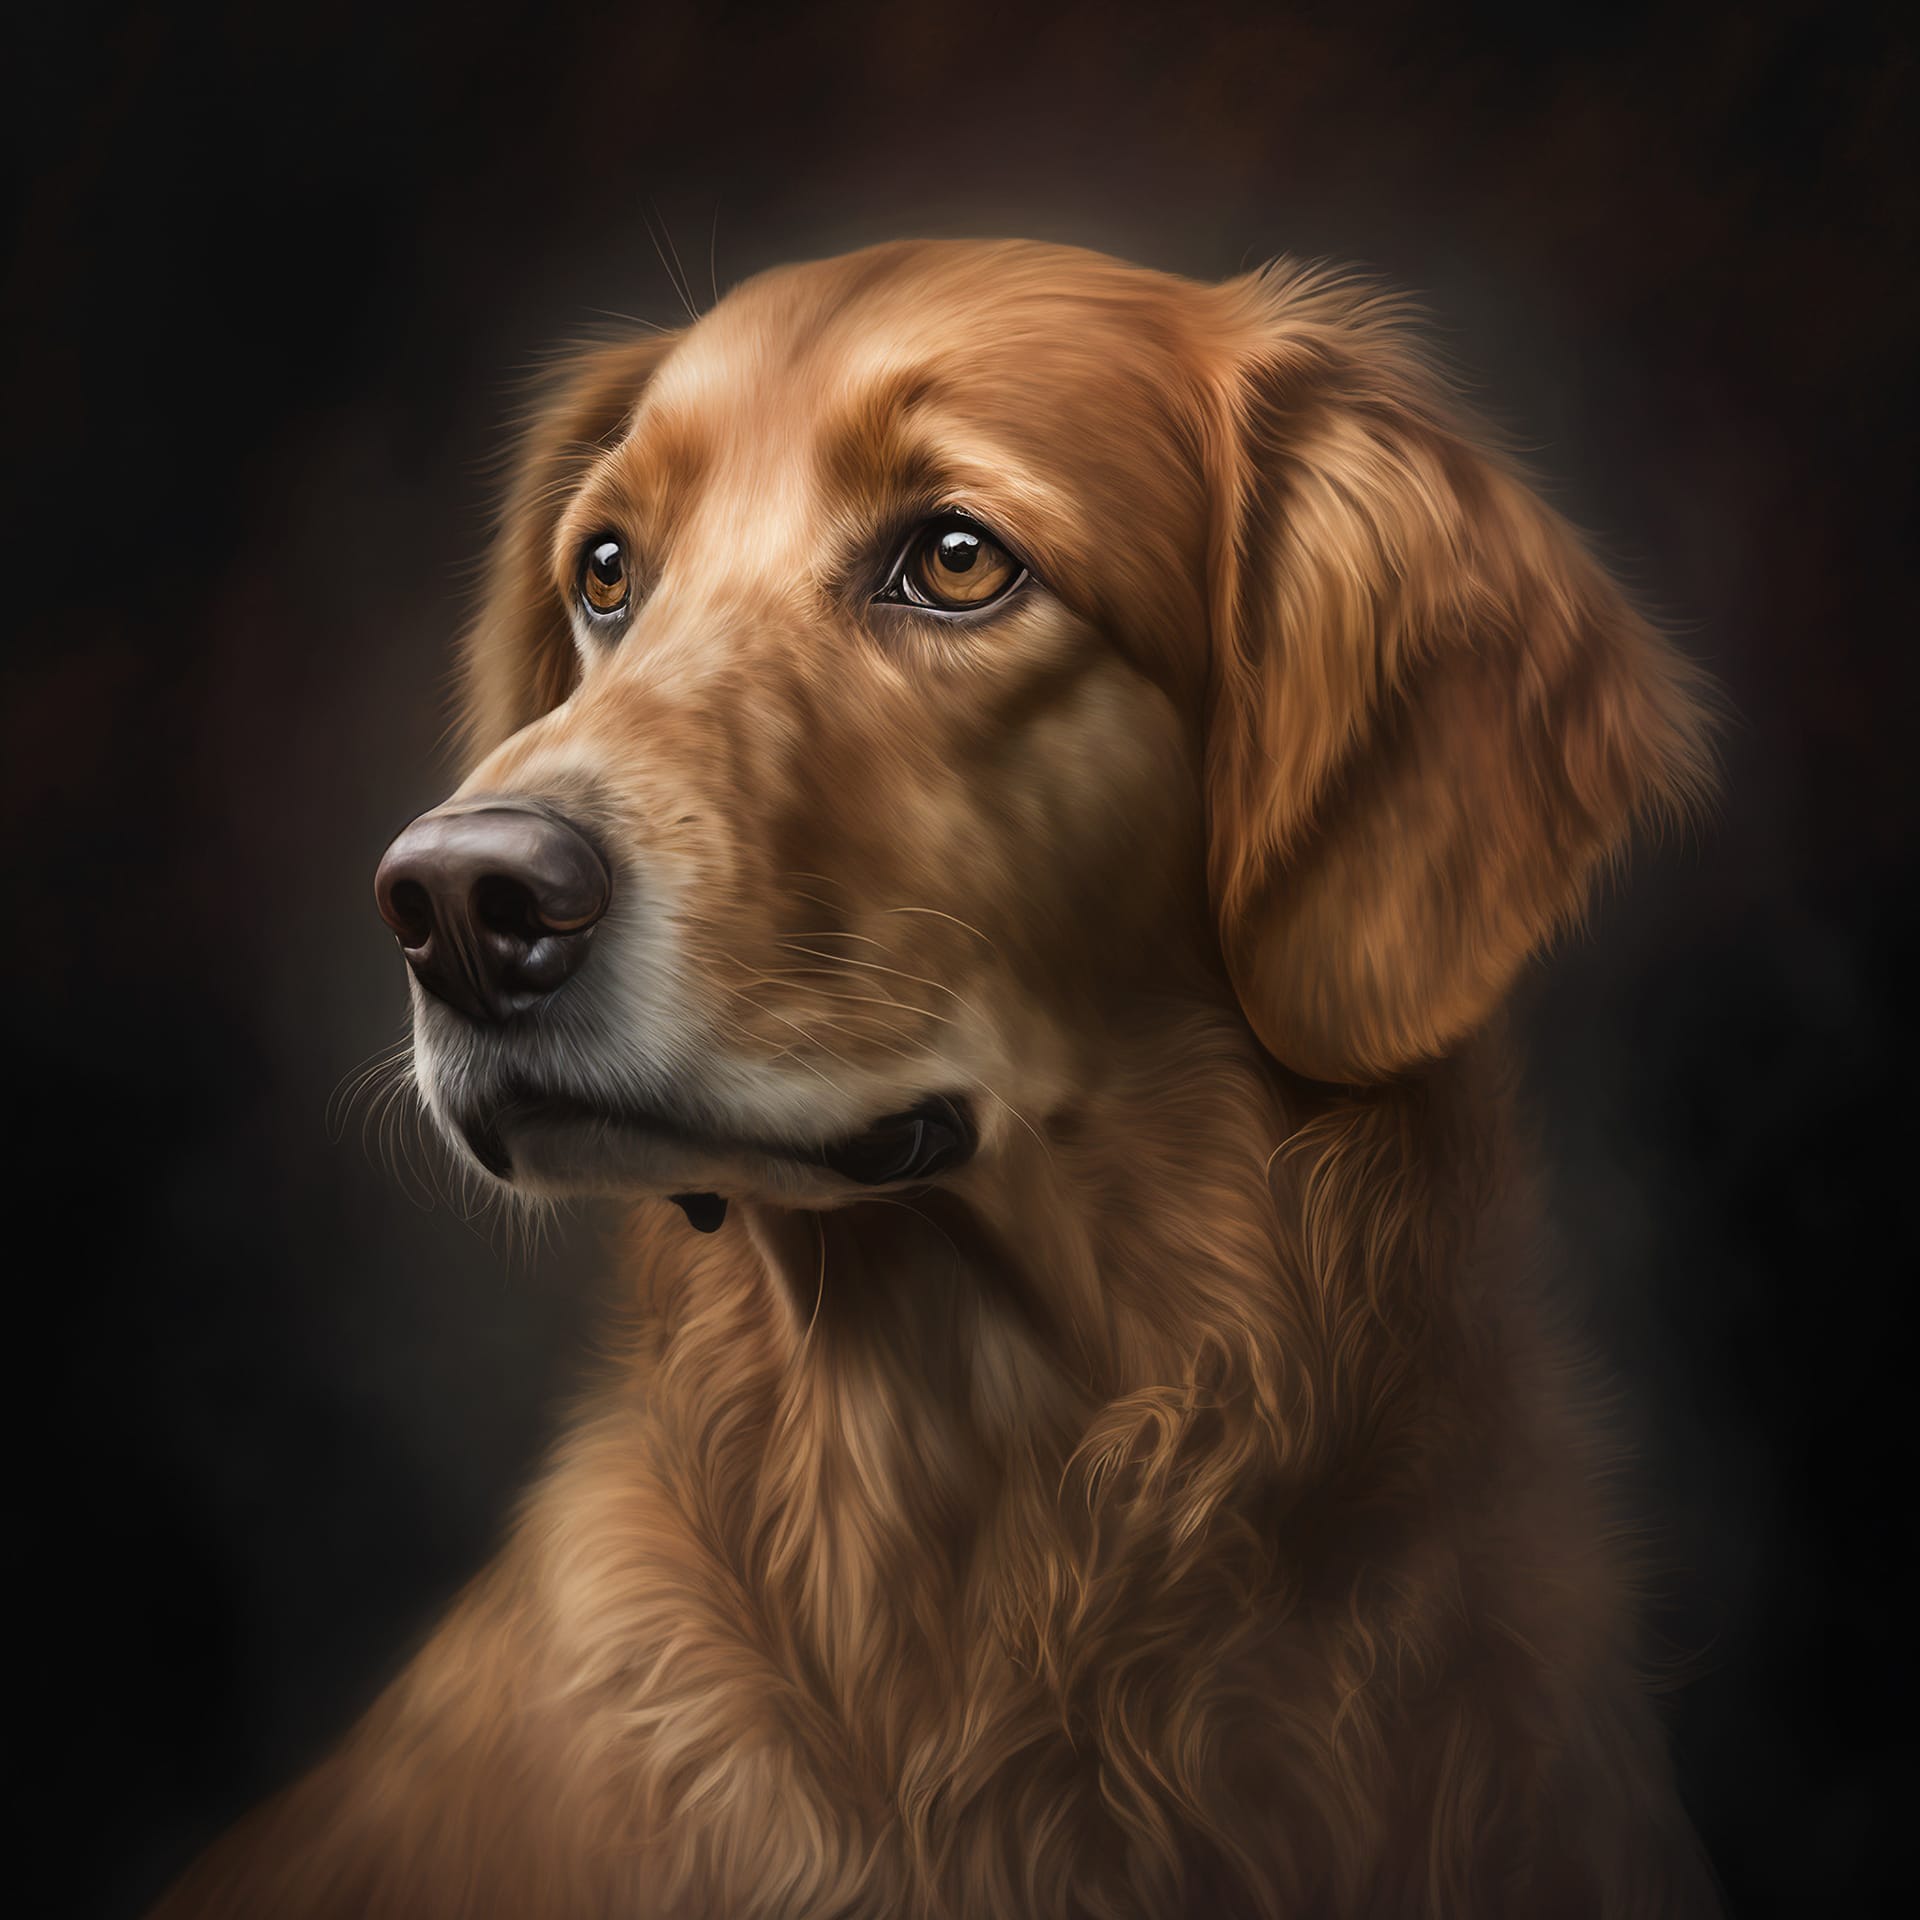 Dog portrait creative digital painting colorful image